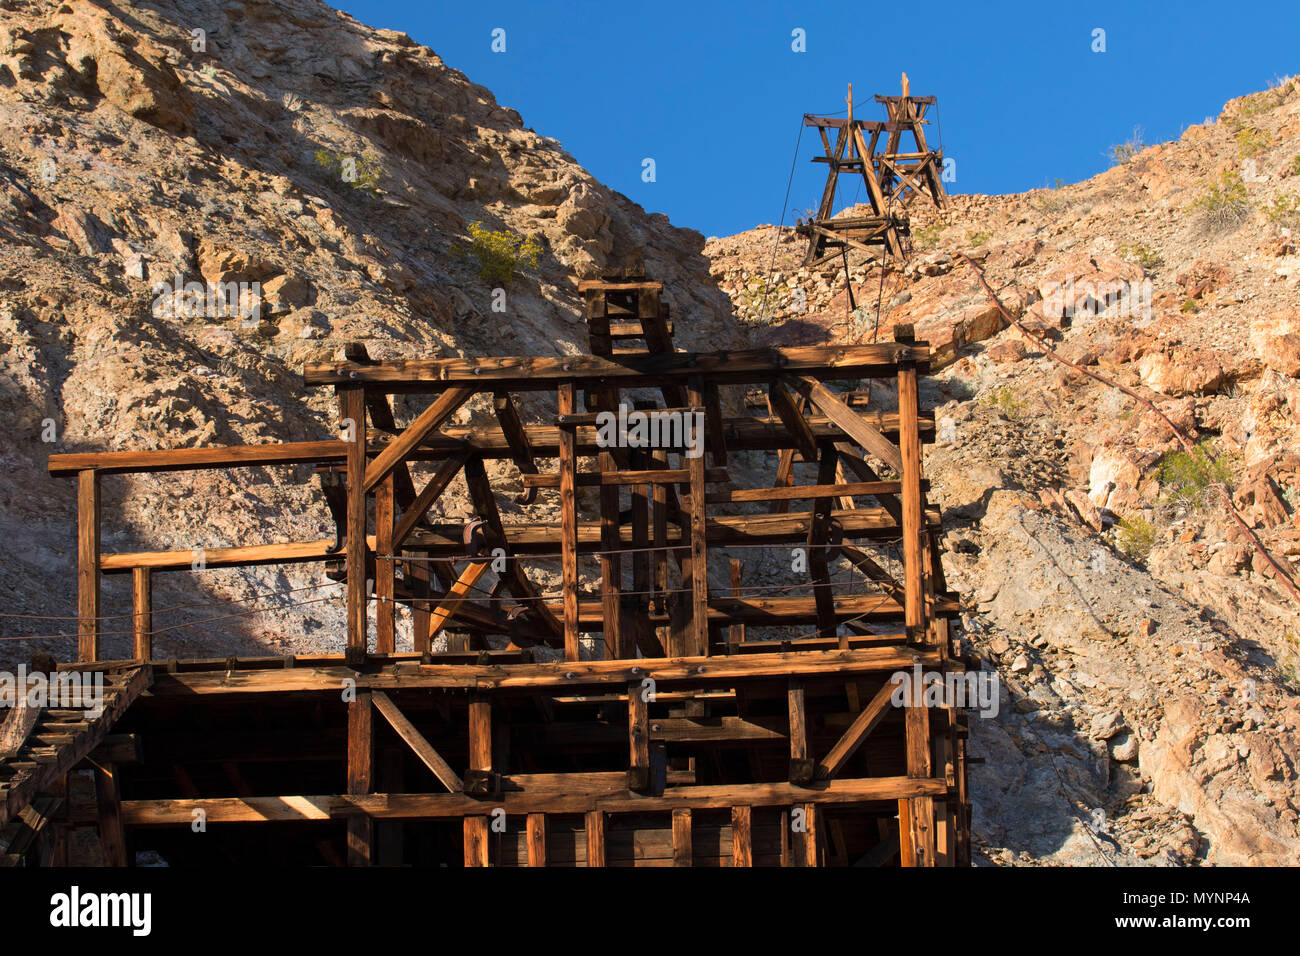 Keane Wonder Mine, Death Valley National Park, California Stock Photo